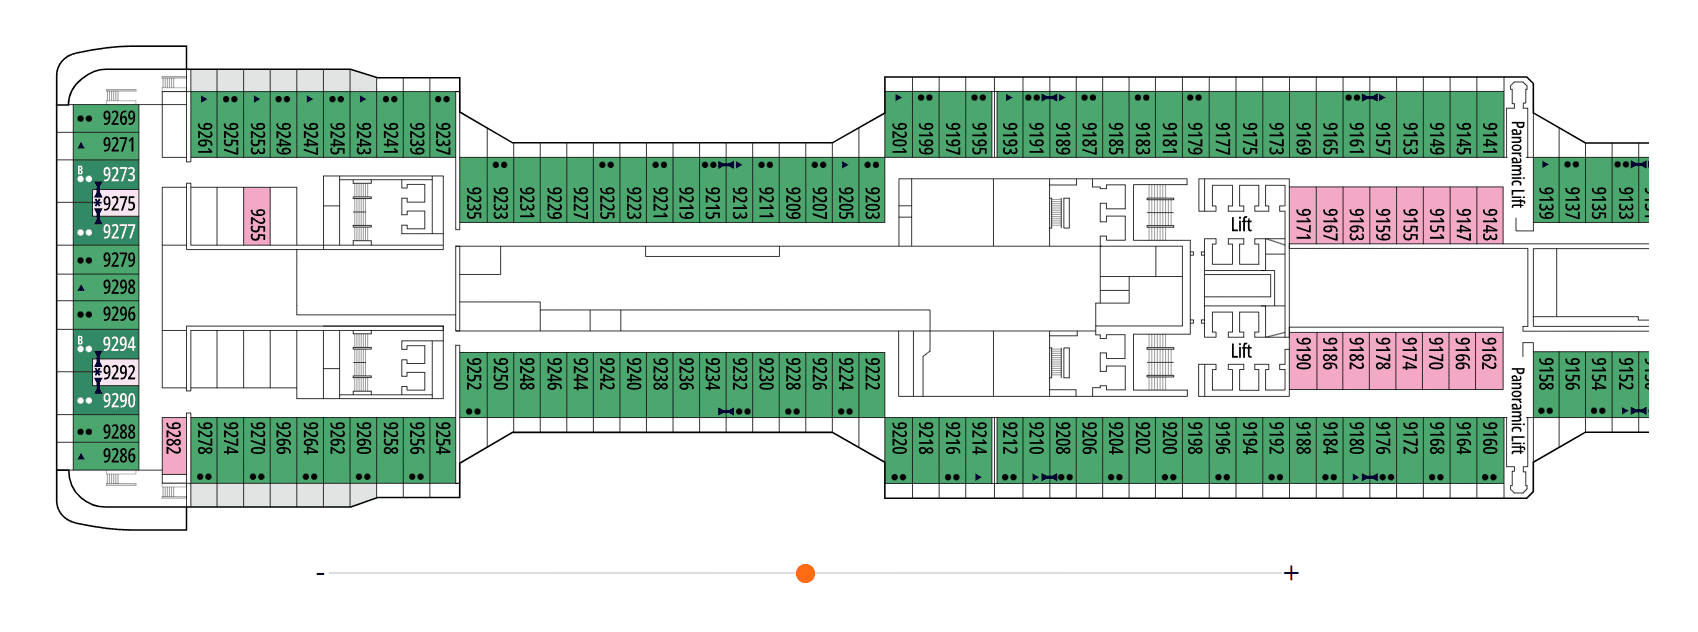 Deck plan of MSC Meraviglia Deck 9